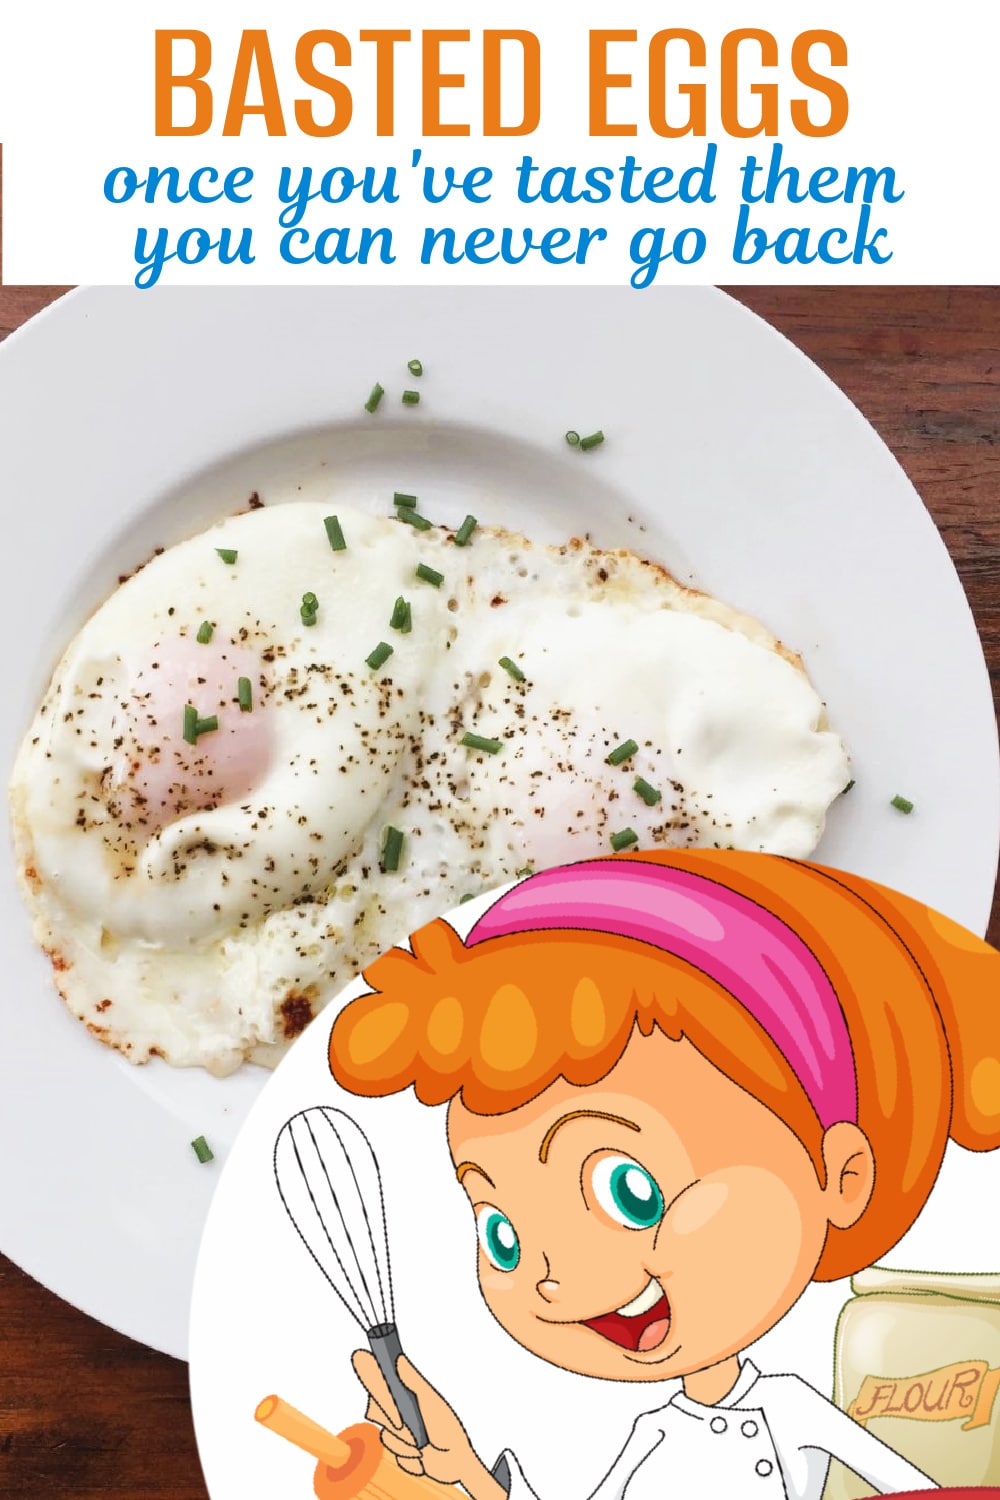 basted eggs with runny yolks and crispy egg white edges